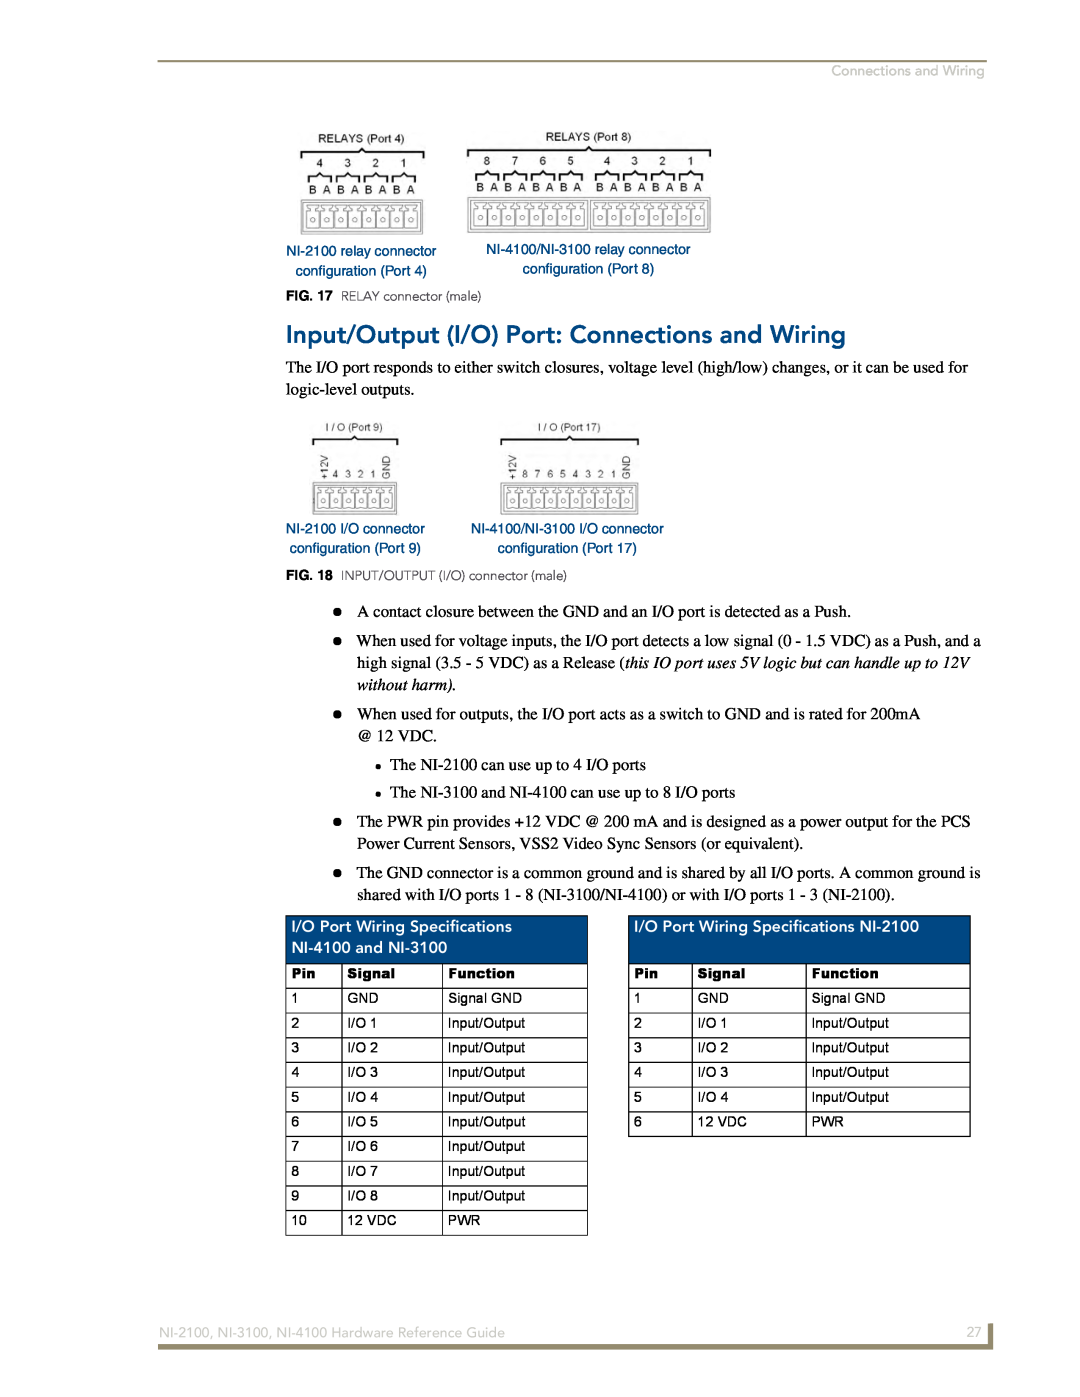 AMX NI-3100, NI-4100, NI-2100 manual Input/Output I/O Port Connections and Wiring 